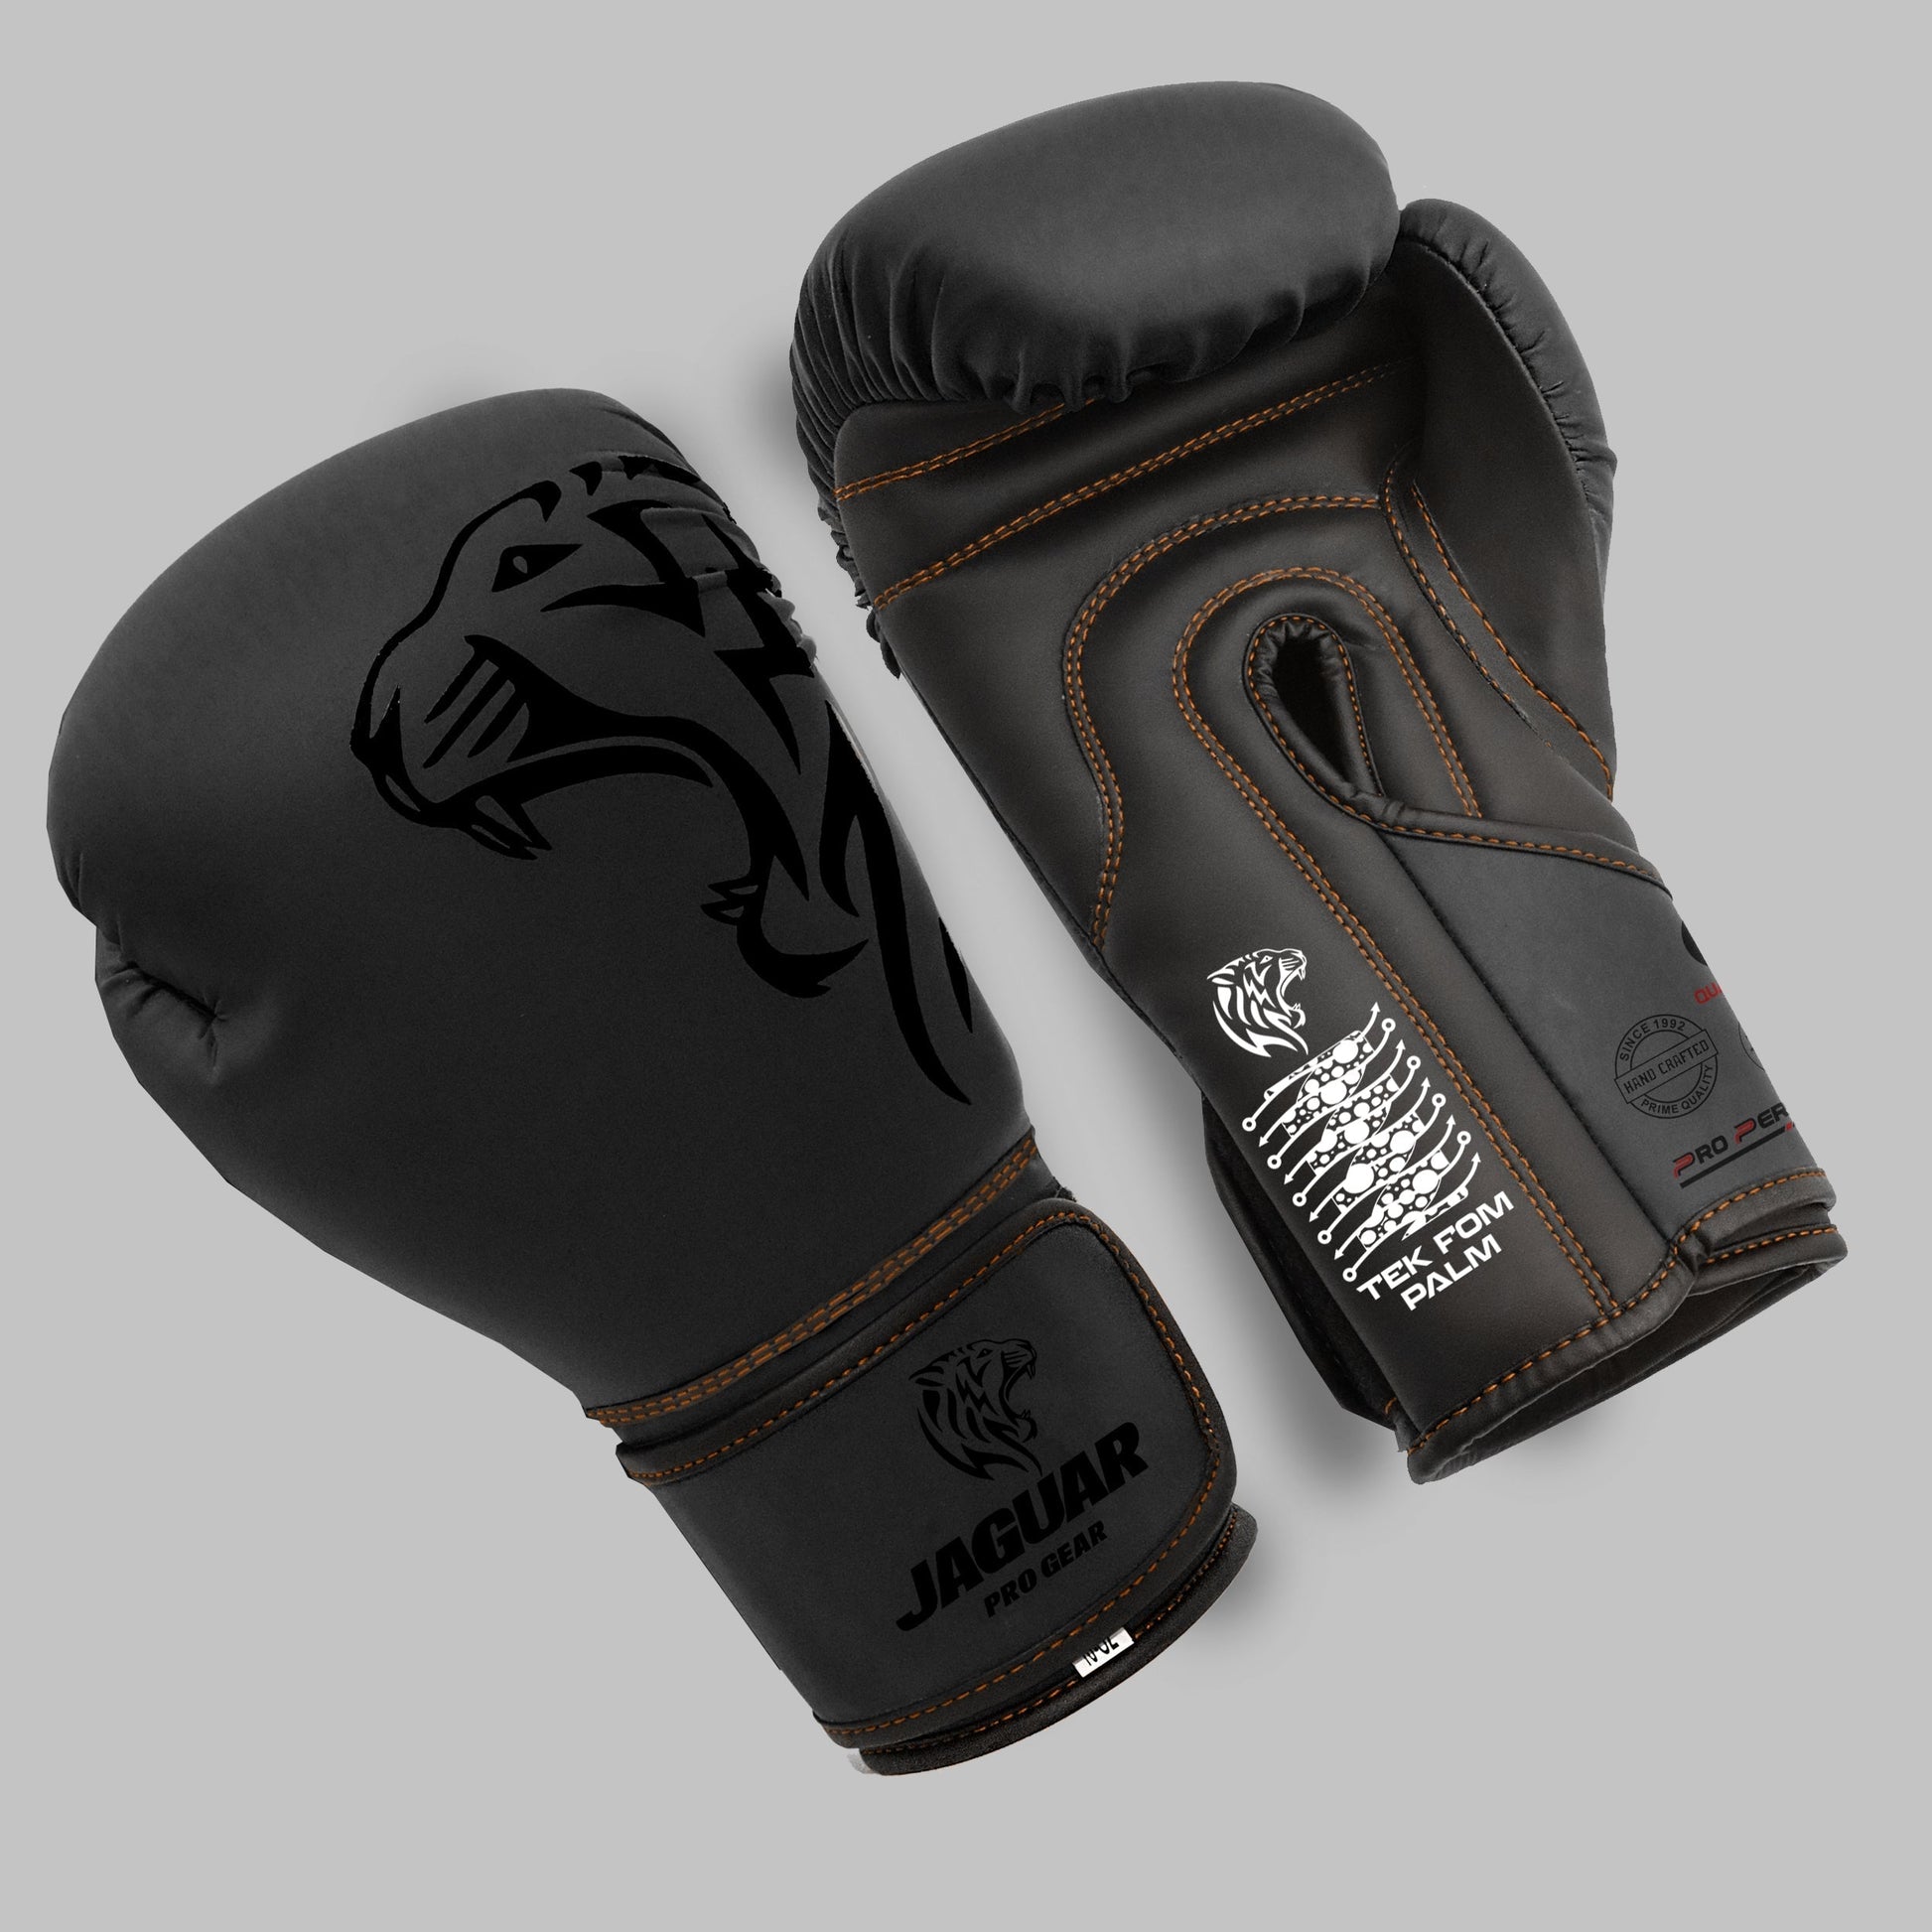 Everlast-Professional Muay Thai Pad for Kickboxing & MMA (Black), Boxing  Pads -  Canada